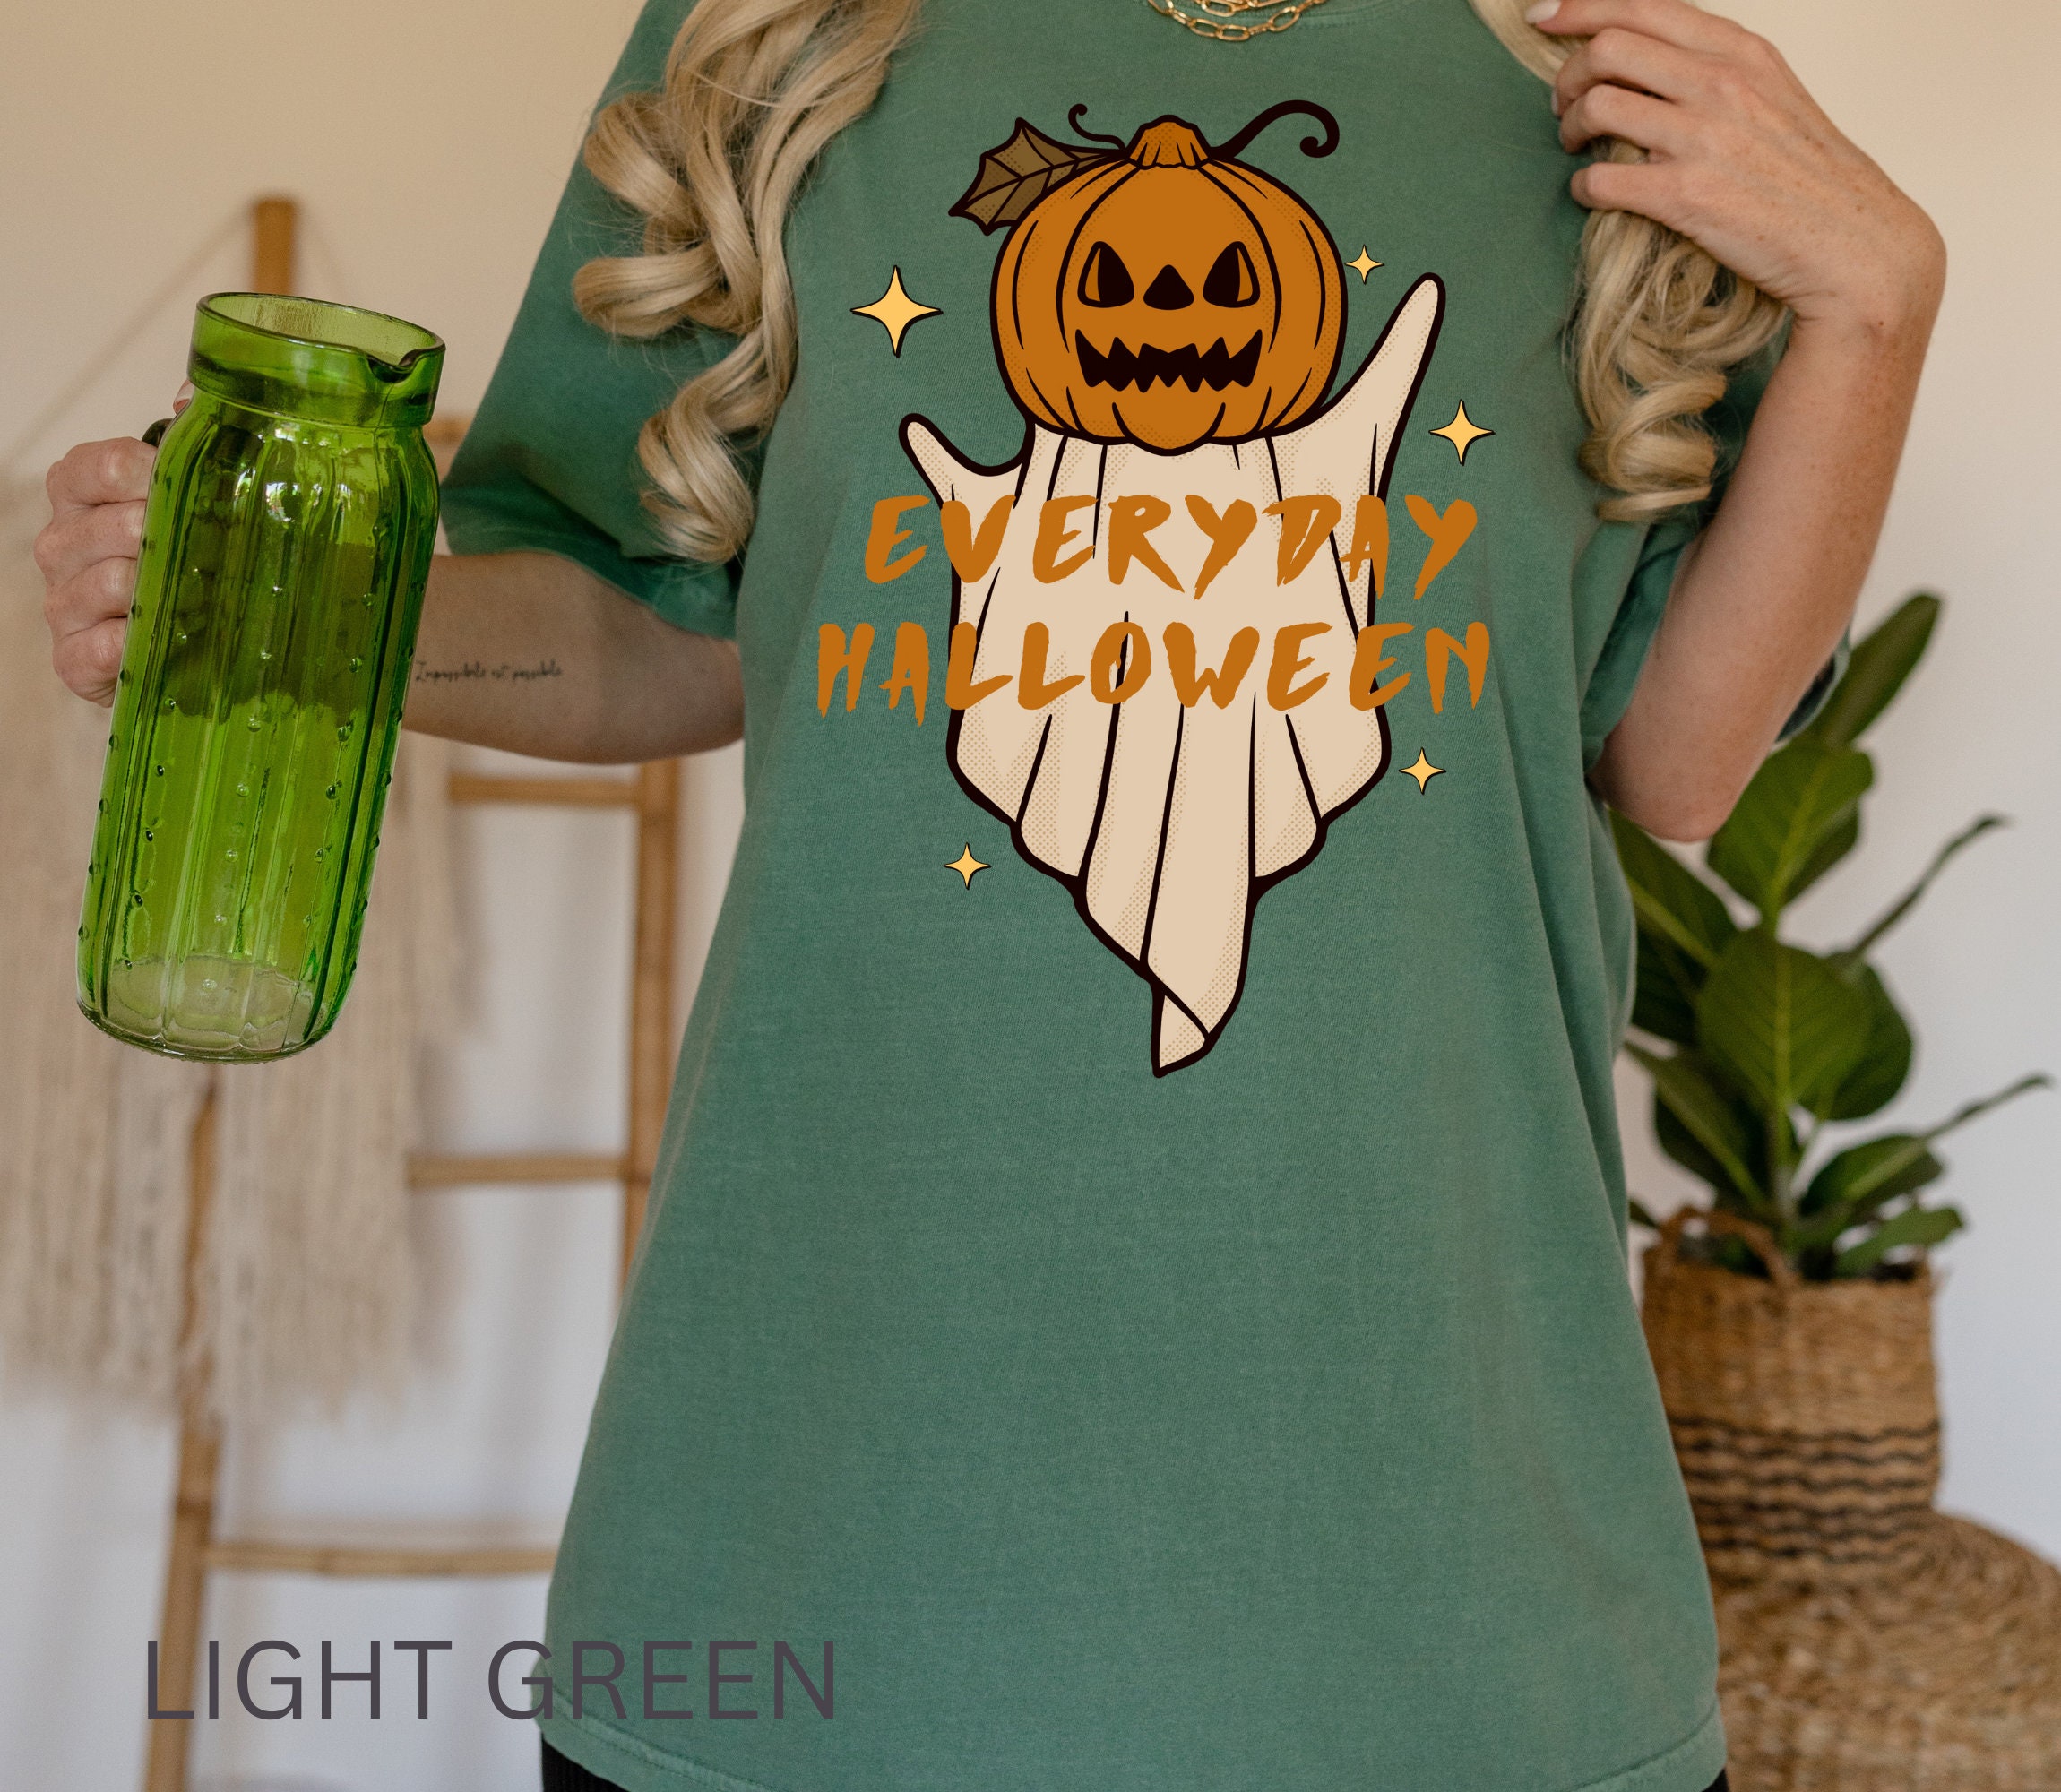 Discover Everyday Halloween Vintage Halloween Shirt - Jacko Lantern Shirt for Adults - Spooky Shirt - Cute Pumpkin Patch Halloween Shirts